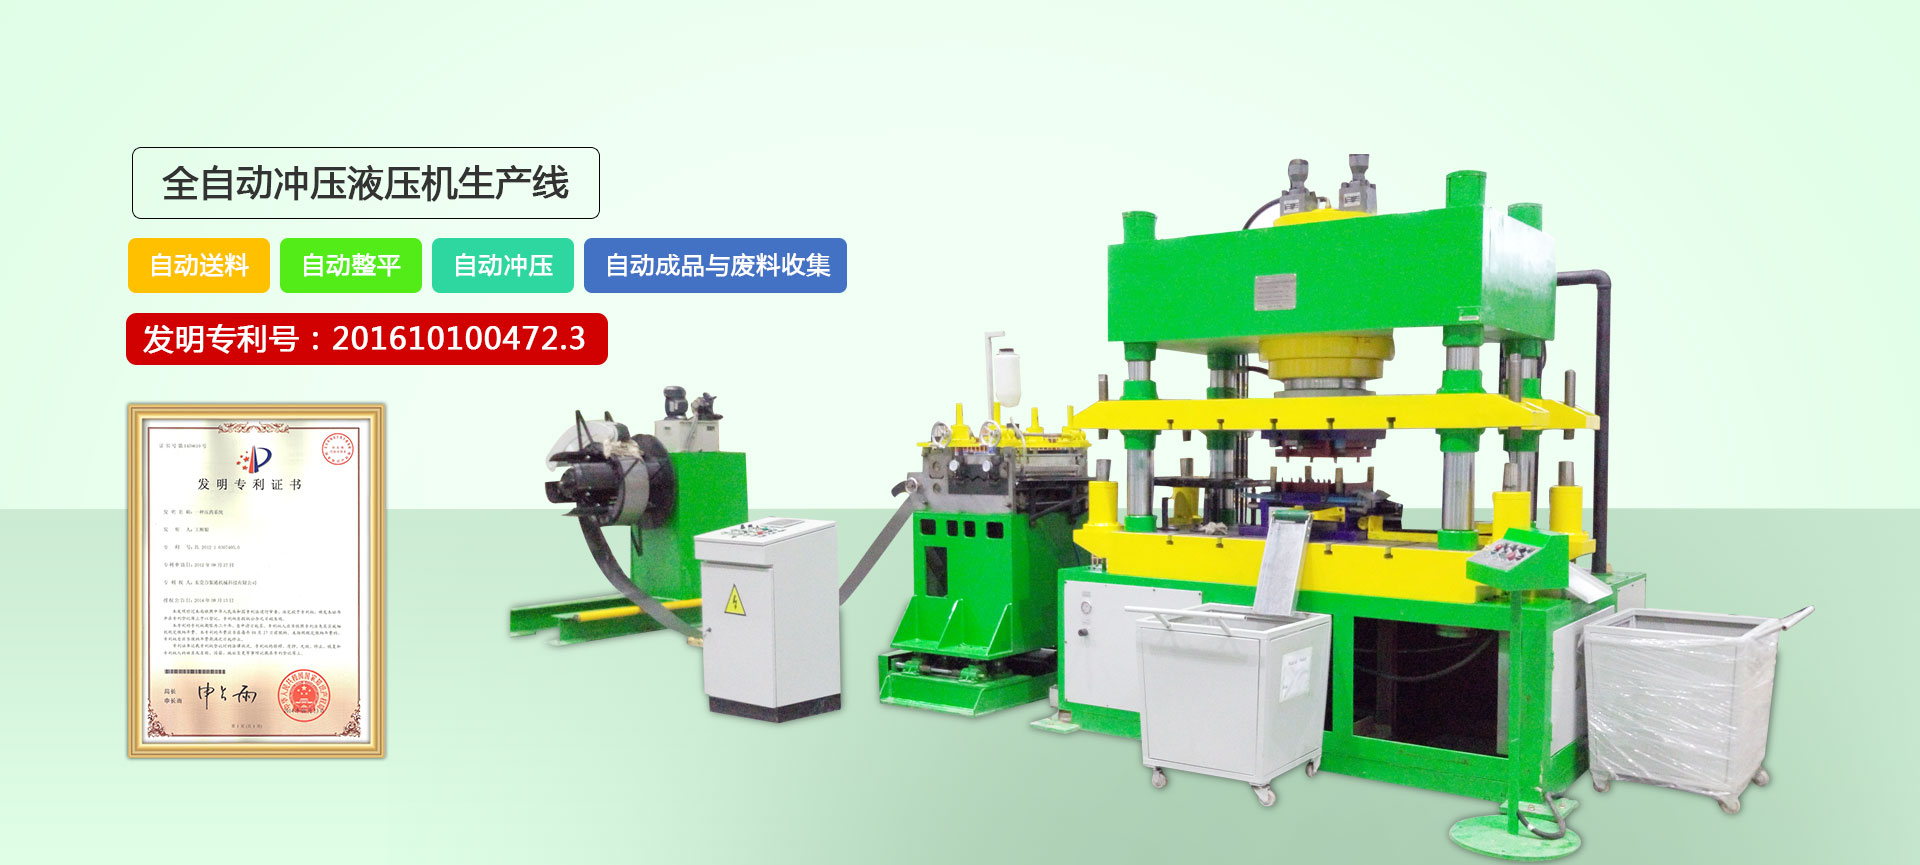 Hydraulic Press Line